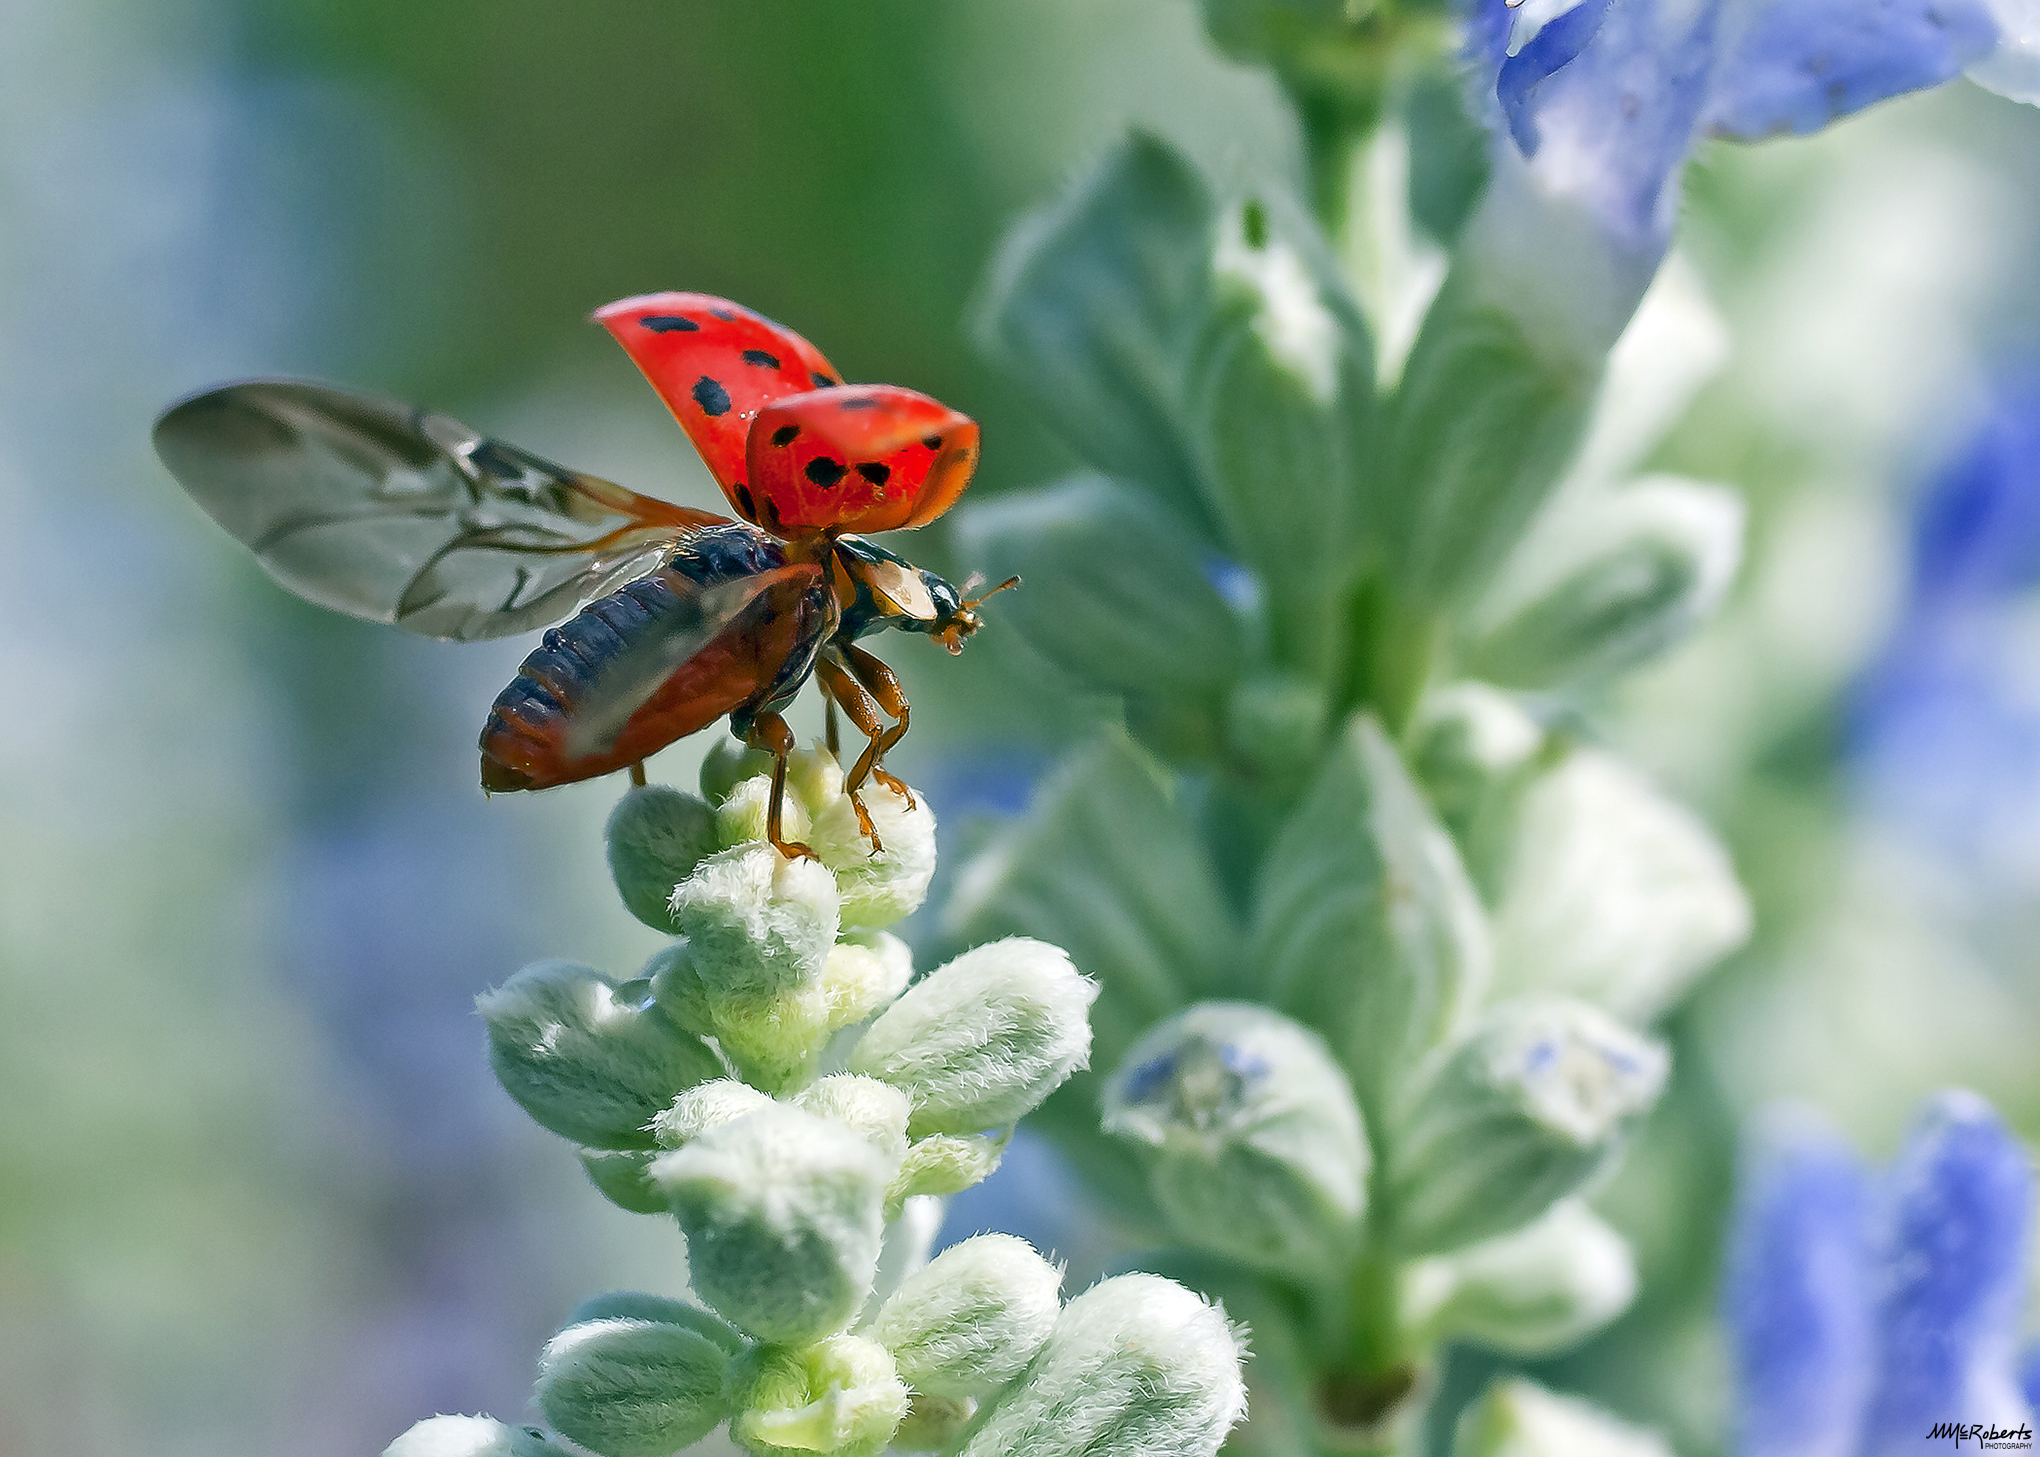 Photo of the Day – Ladybug in Preflight